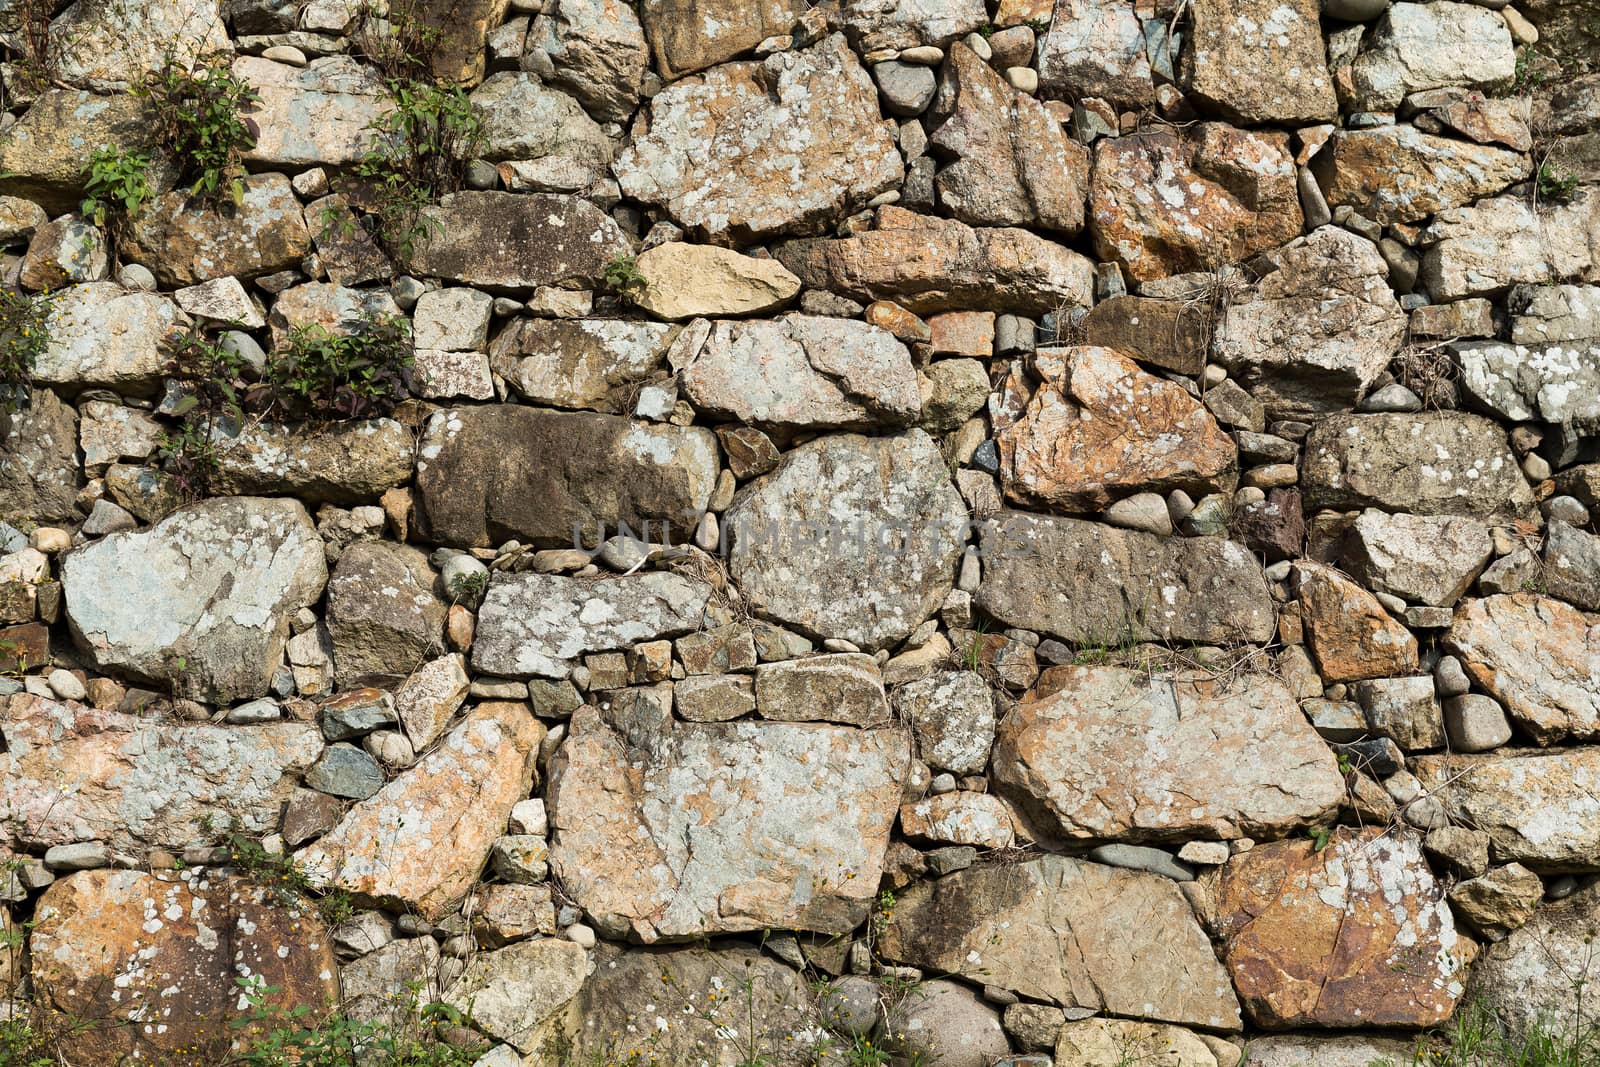 Stone rock wall